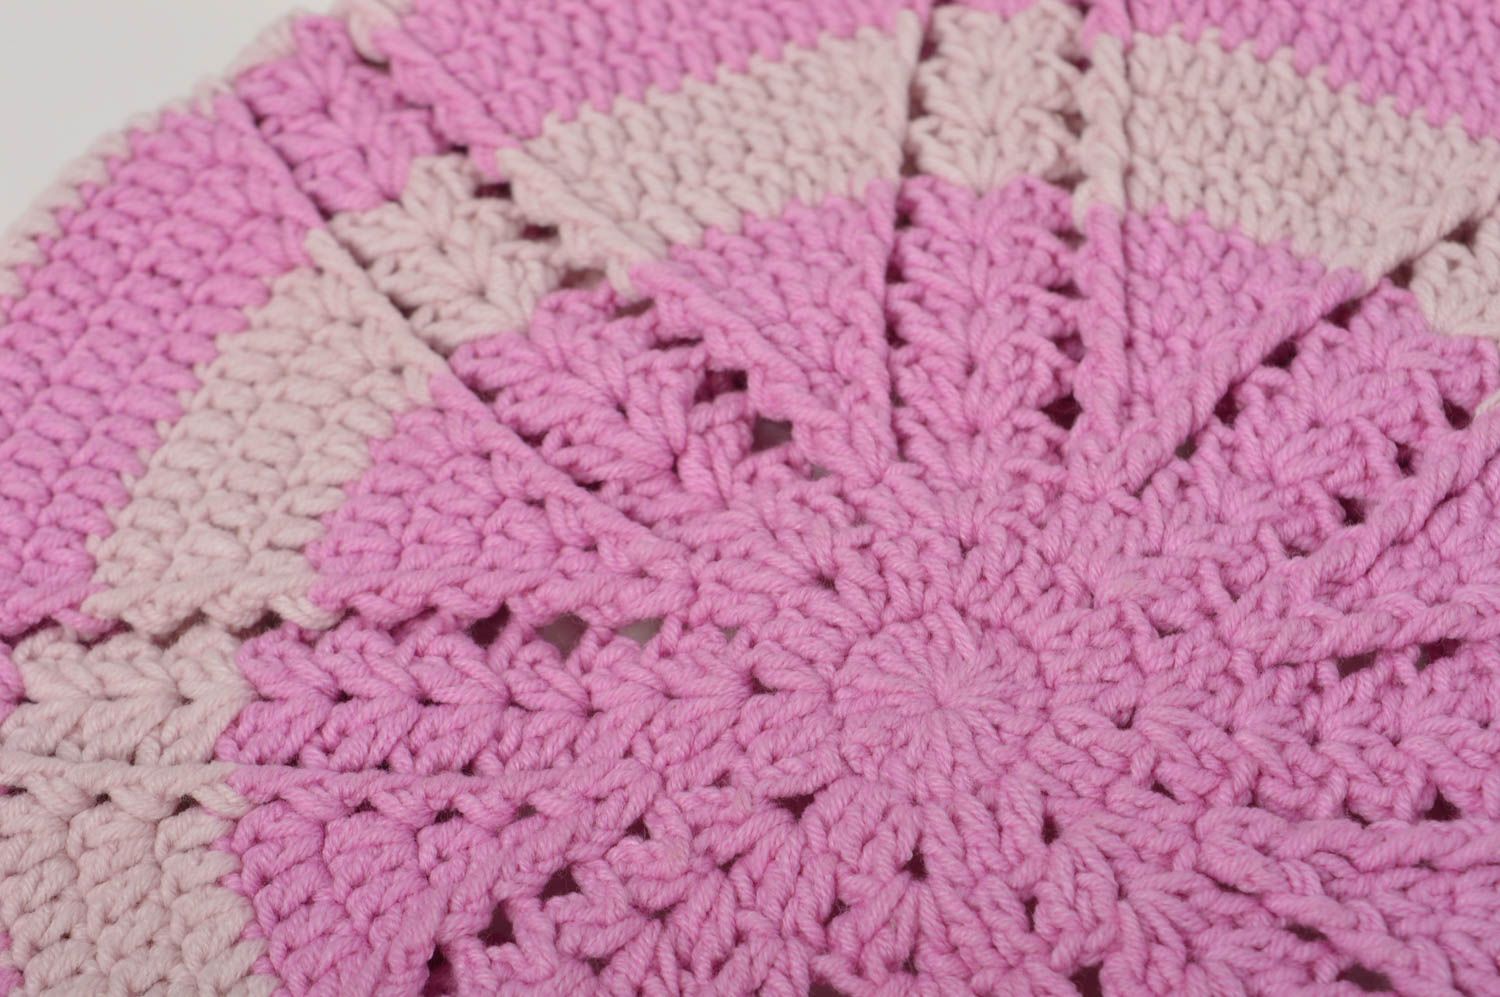 Beautiful handmade crochet har baby hat designs cute hats for kids gift ideas photo 3